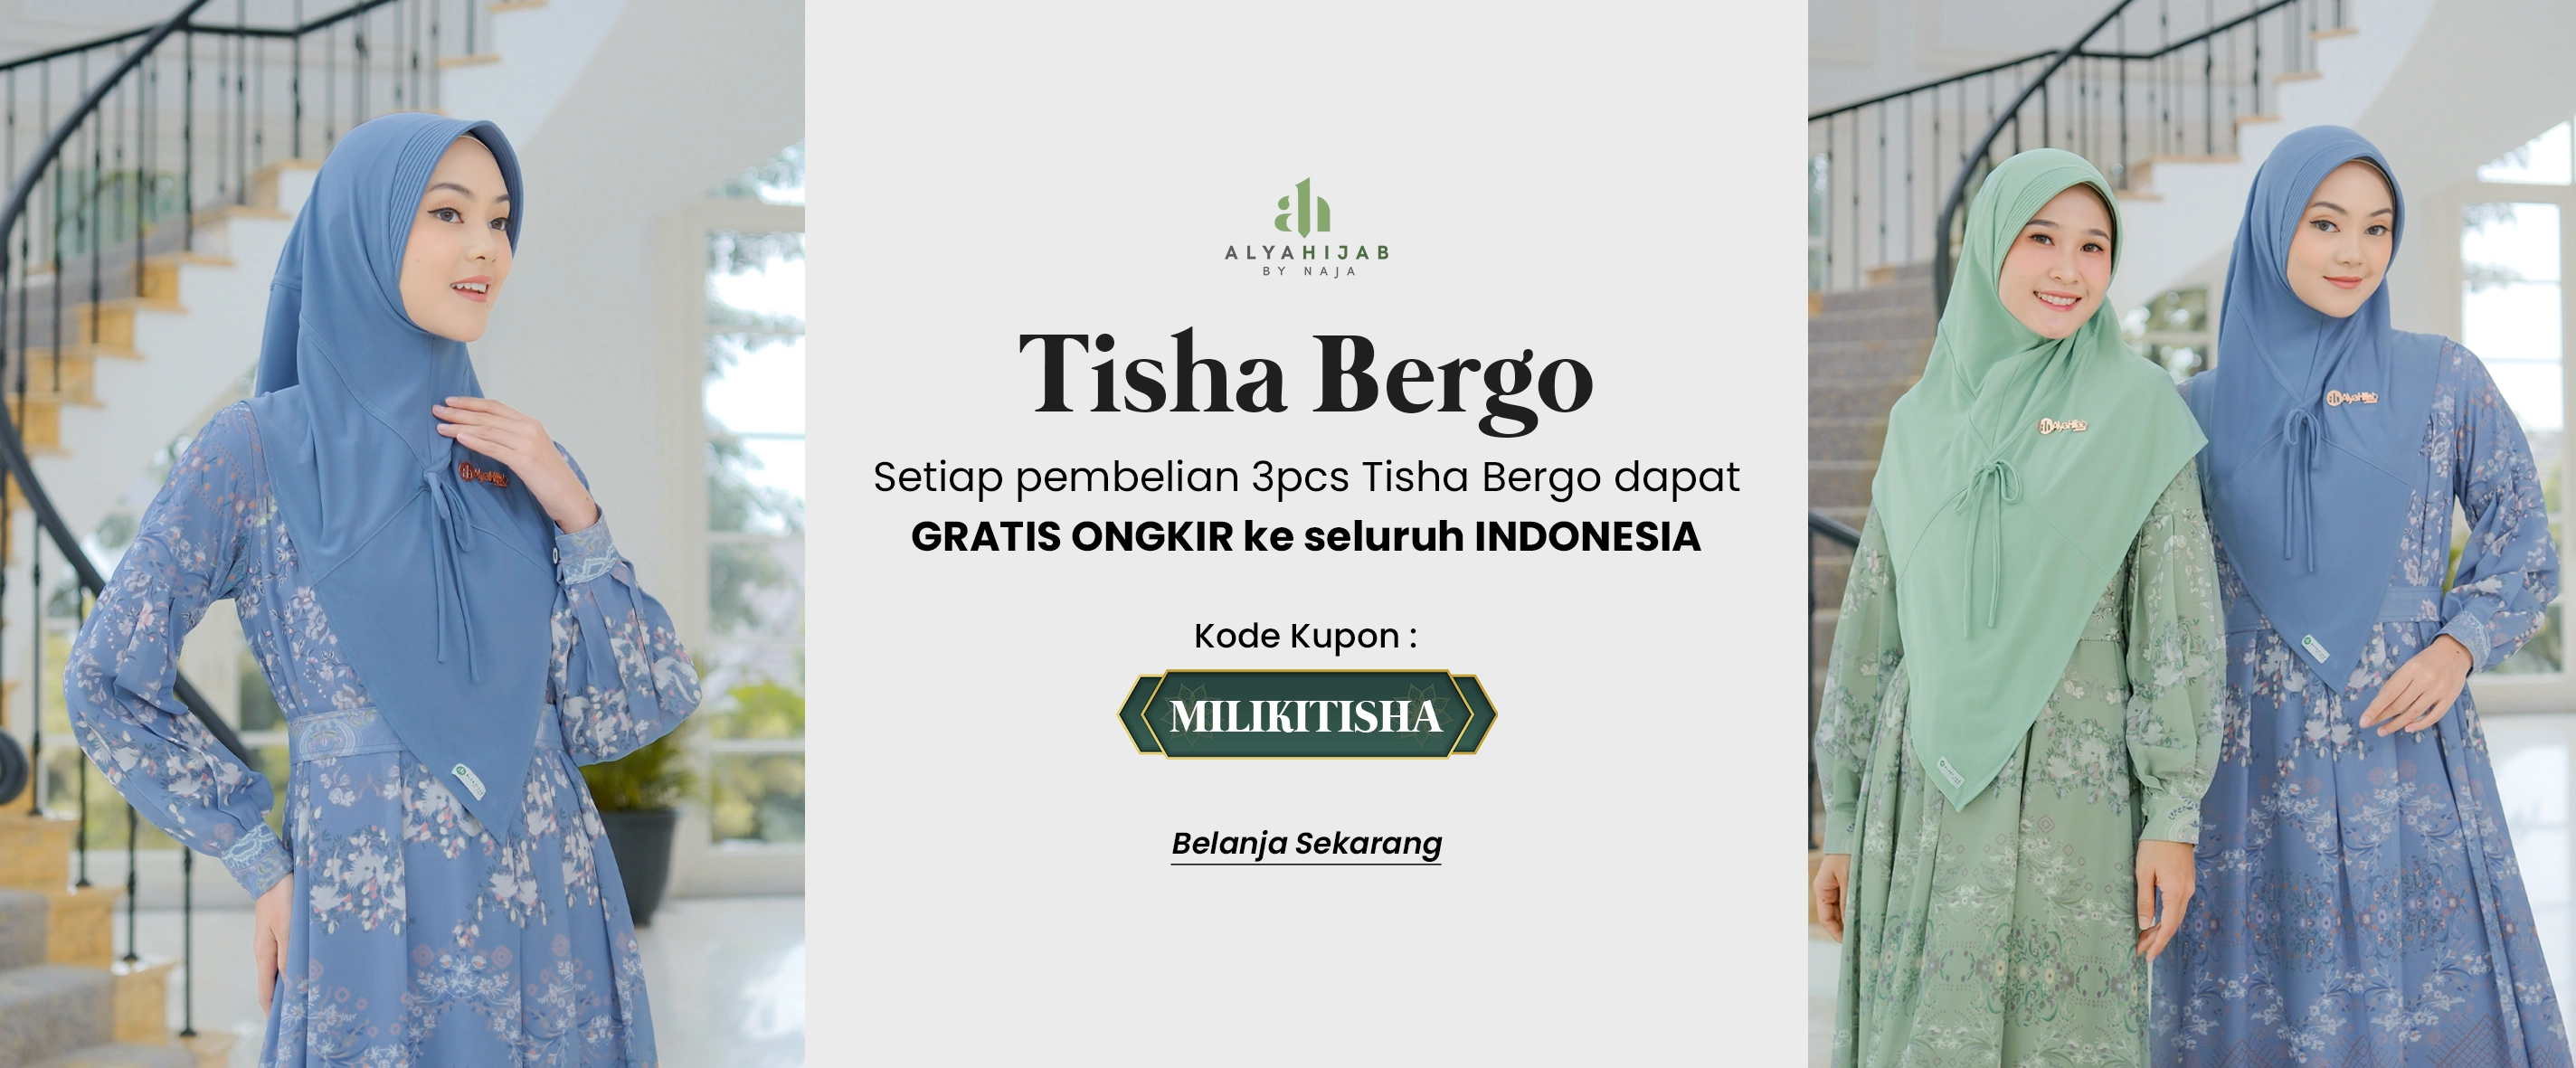 Tisha Bergo